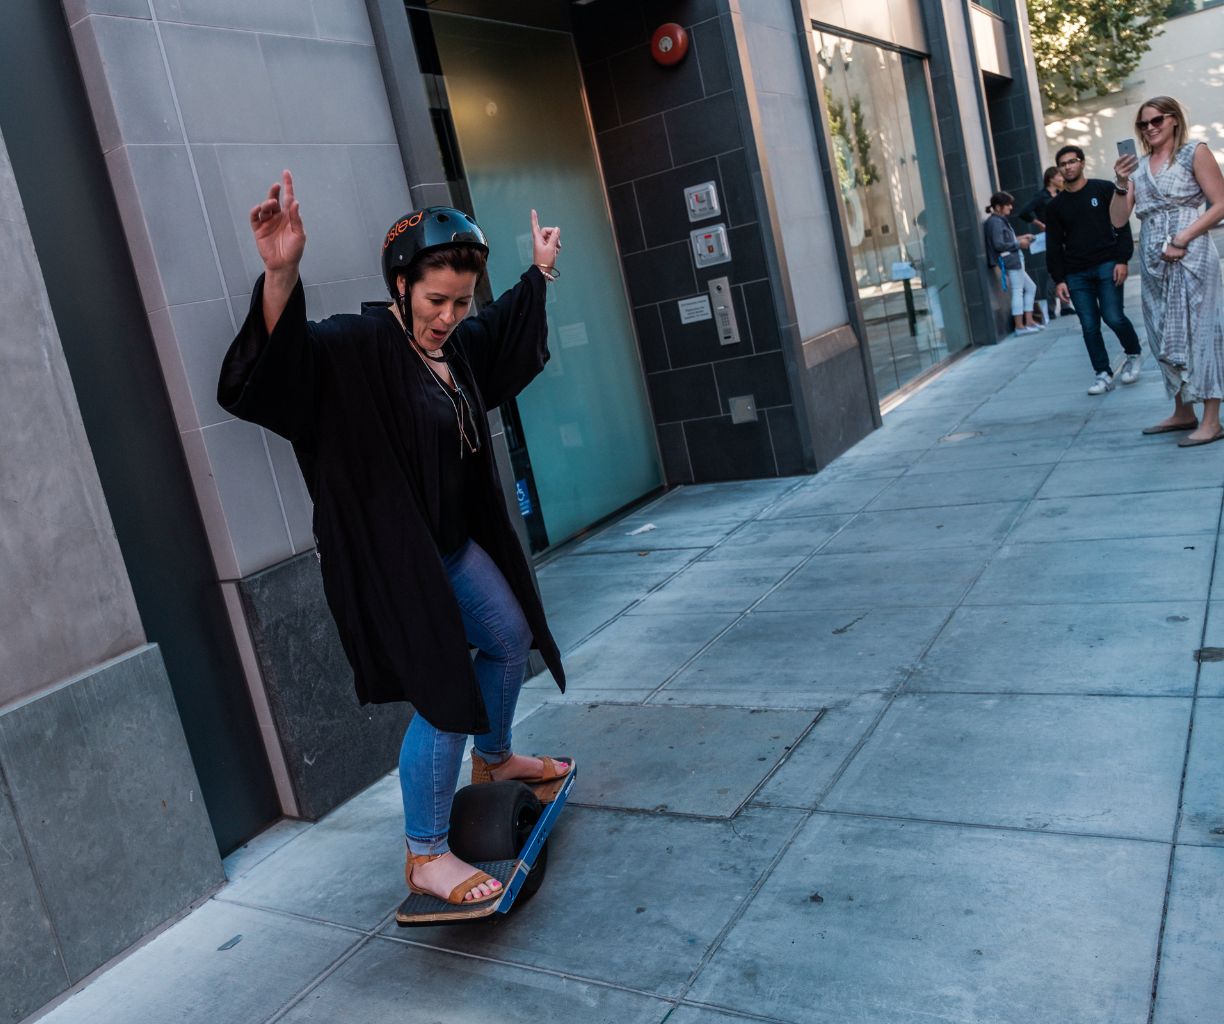 Woman is skateboarding down the sidewalk as people look on.